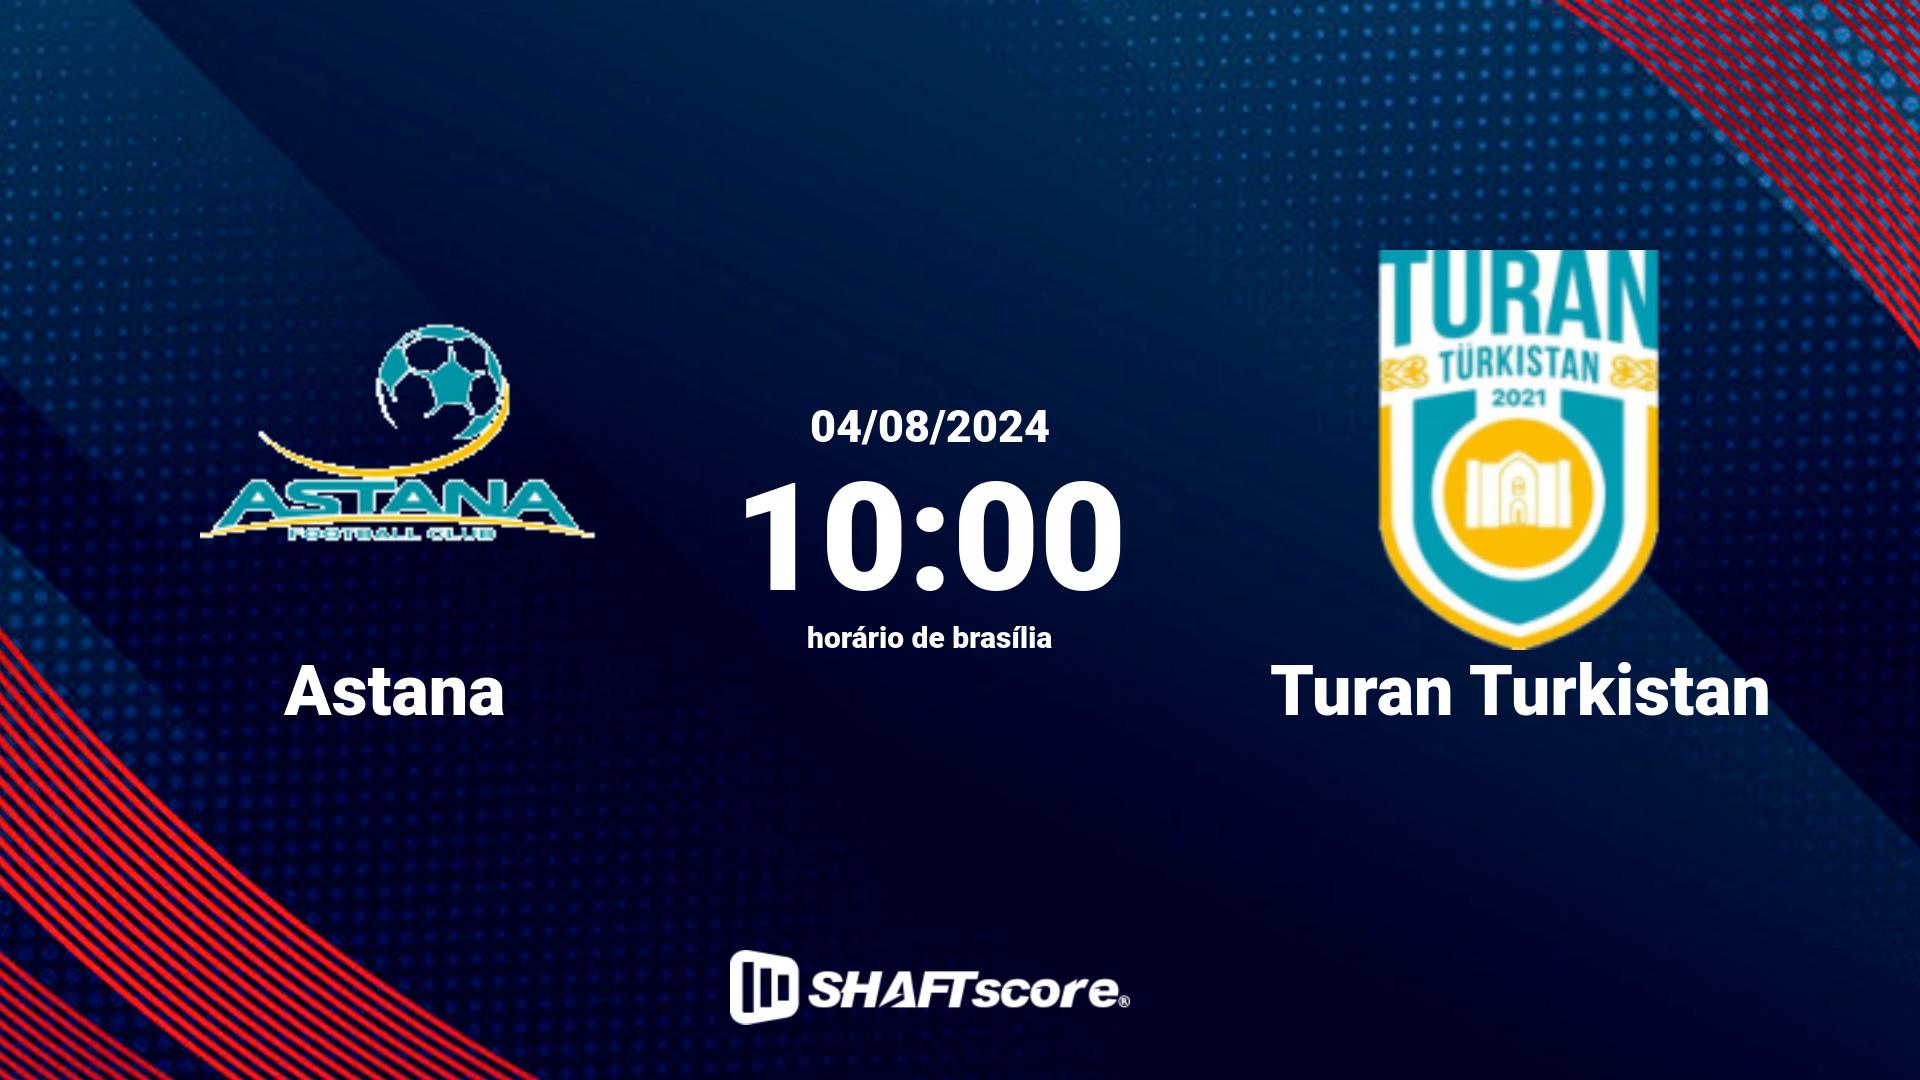 Estatísticas do jogo Astana vs Turan Turkistan 04.08 10:00